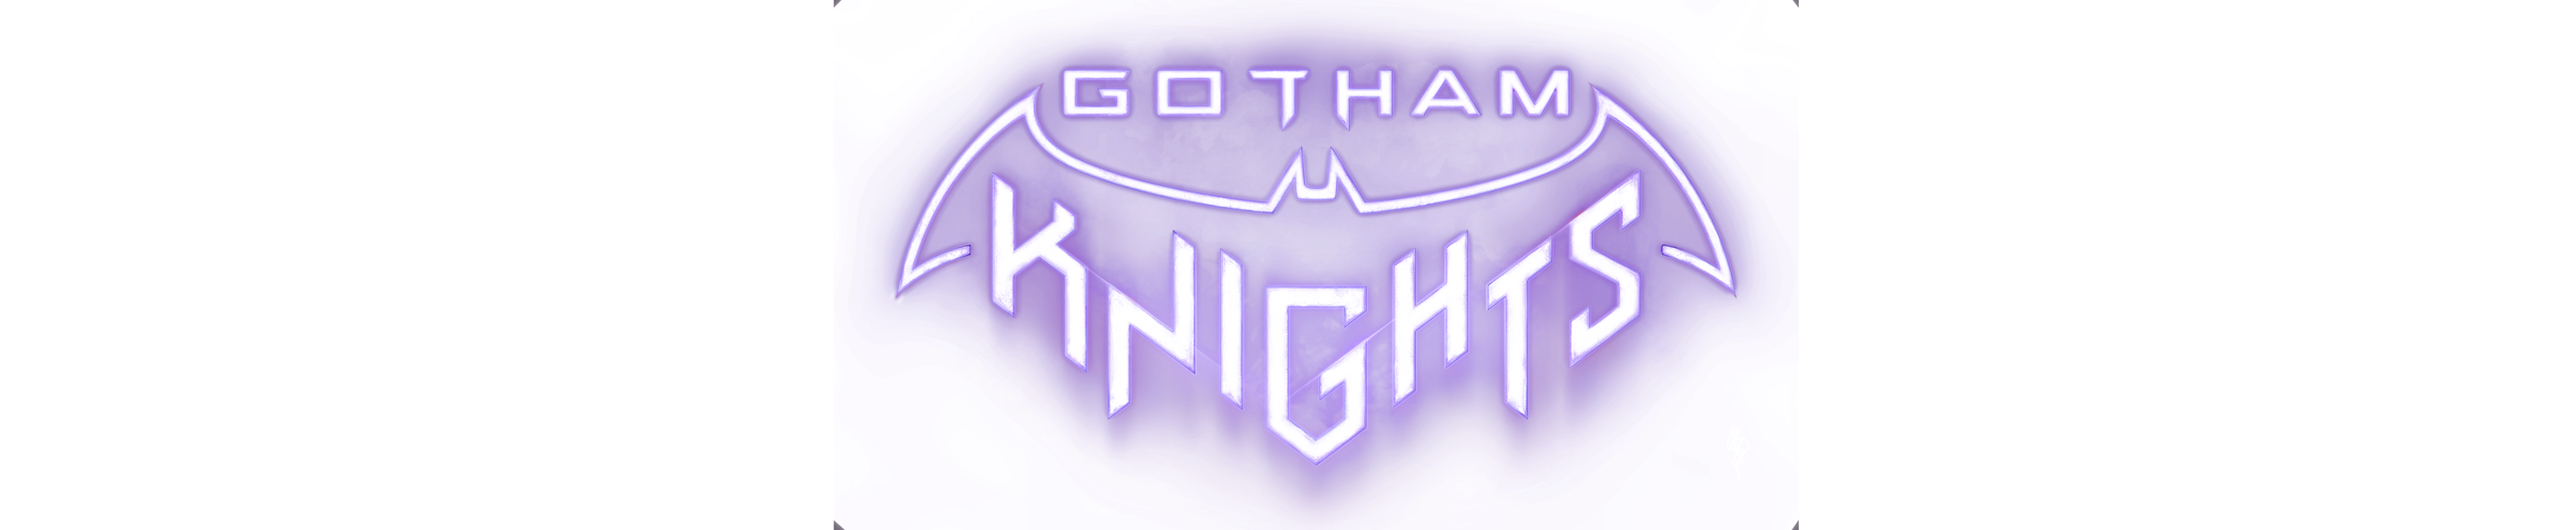 Gotham Knights - Logotipo